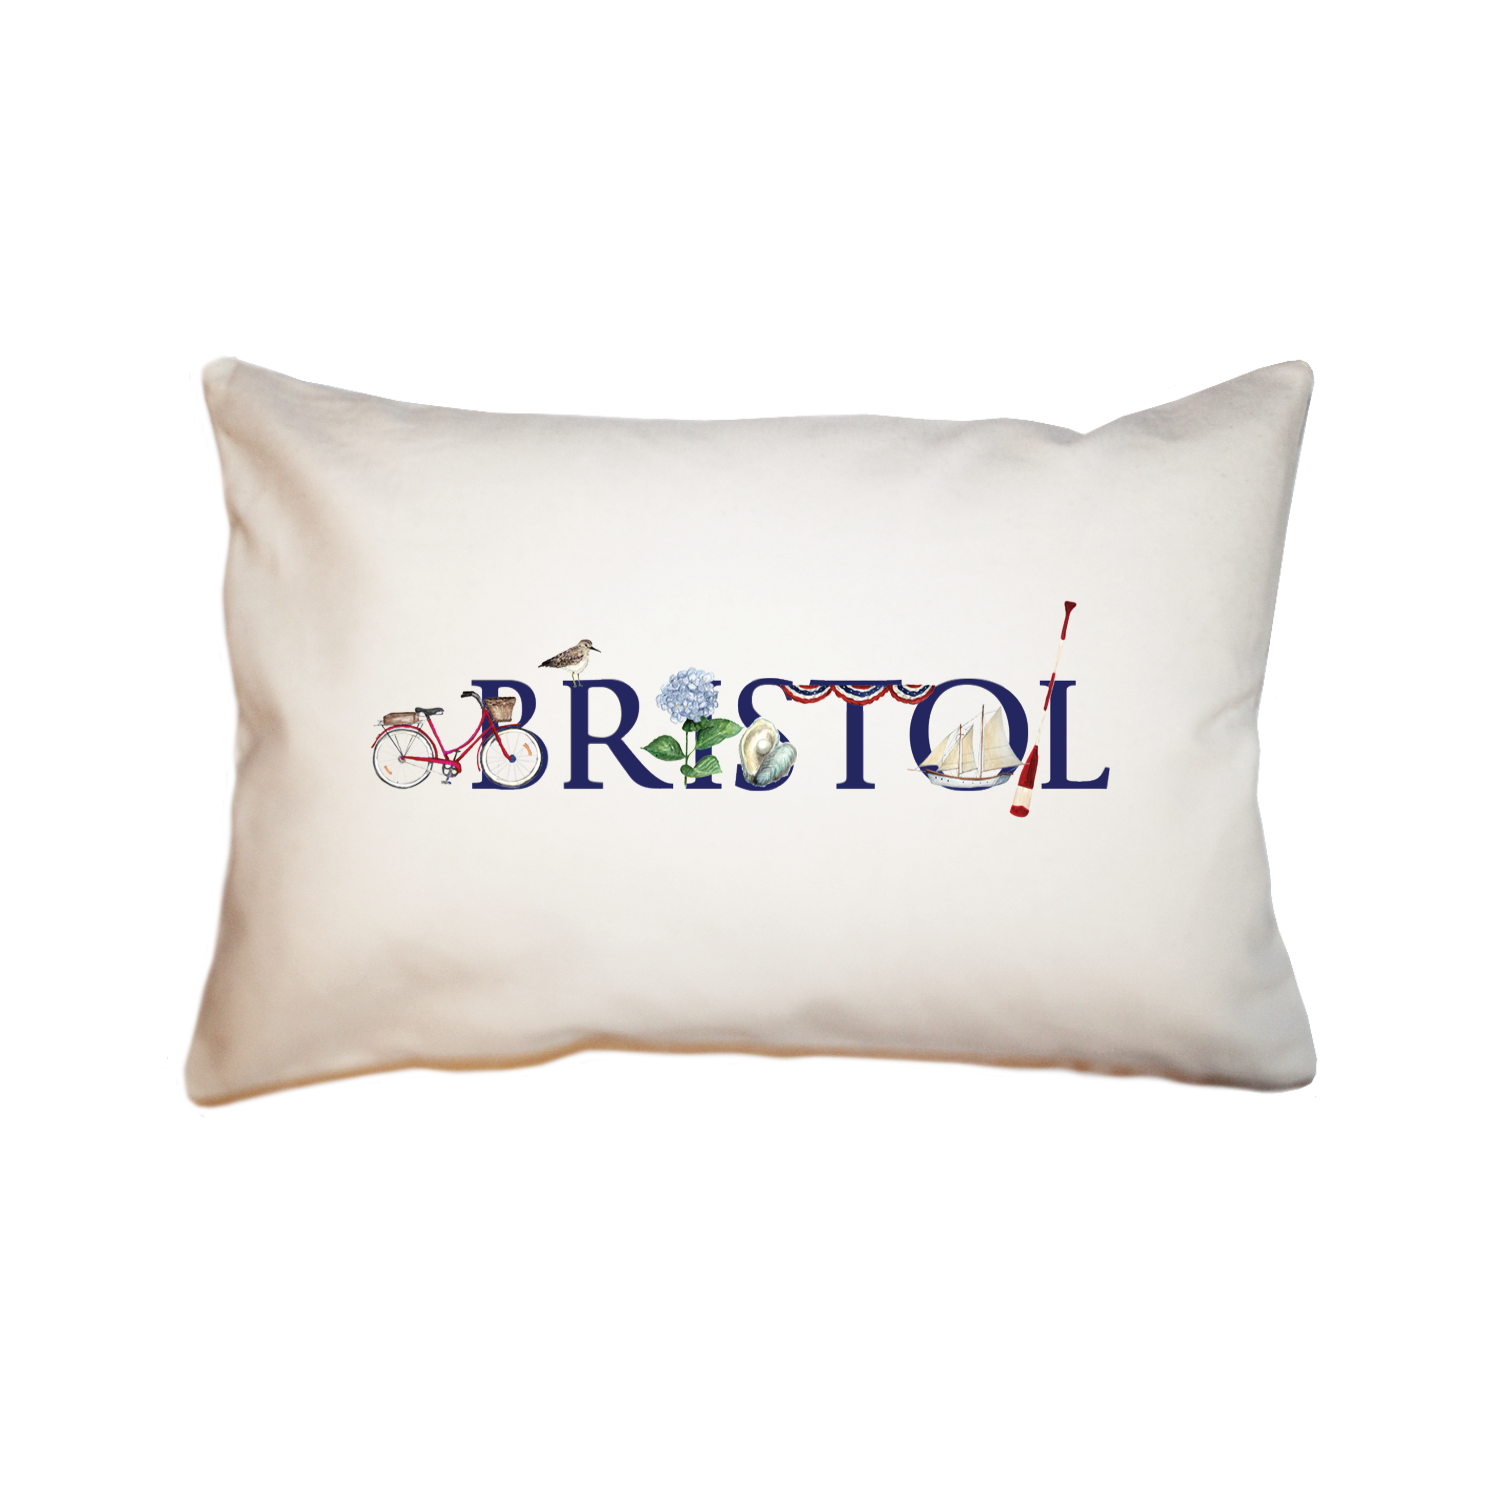 bristol large rectangle pillow